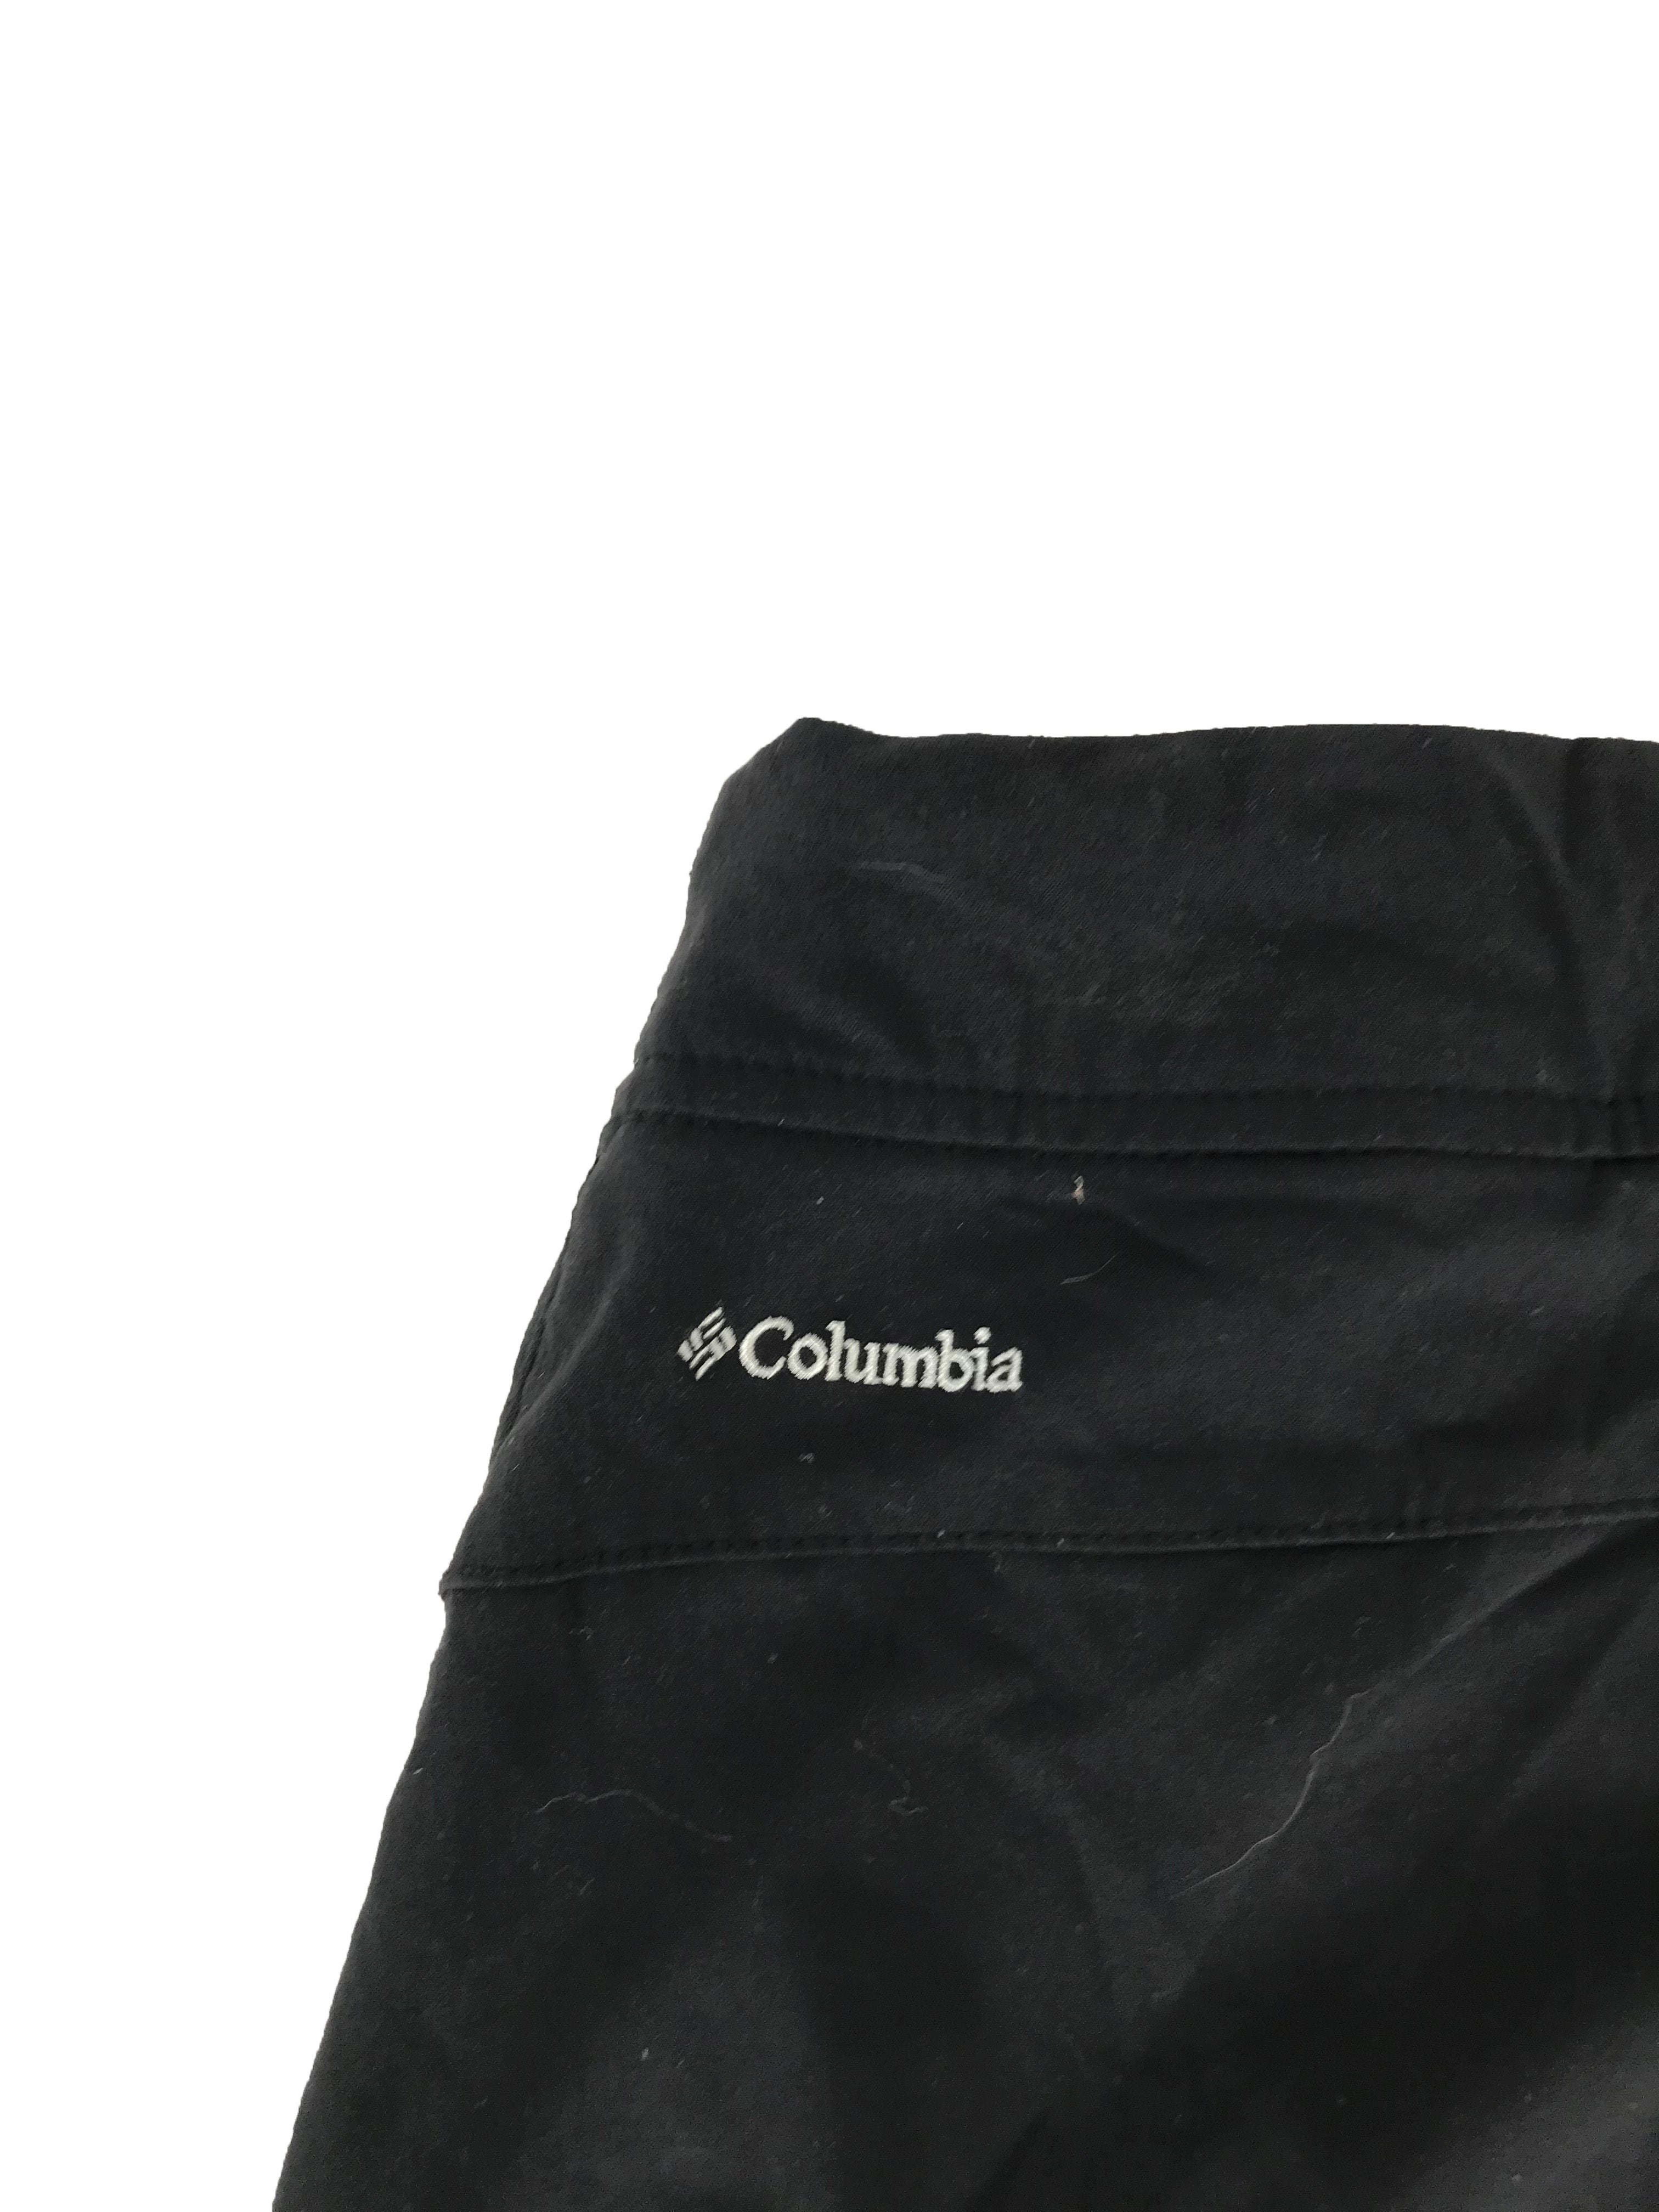 Columbia Omni-Shield Black Shorts Women's Size 4